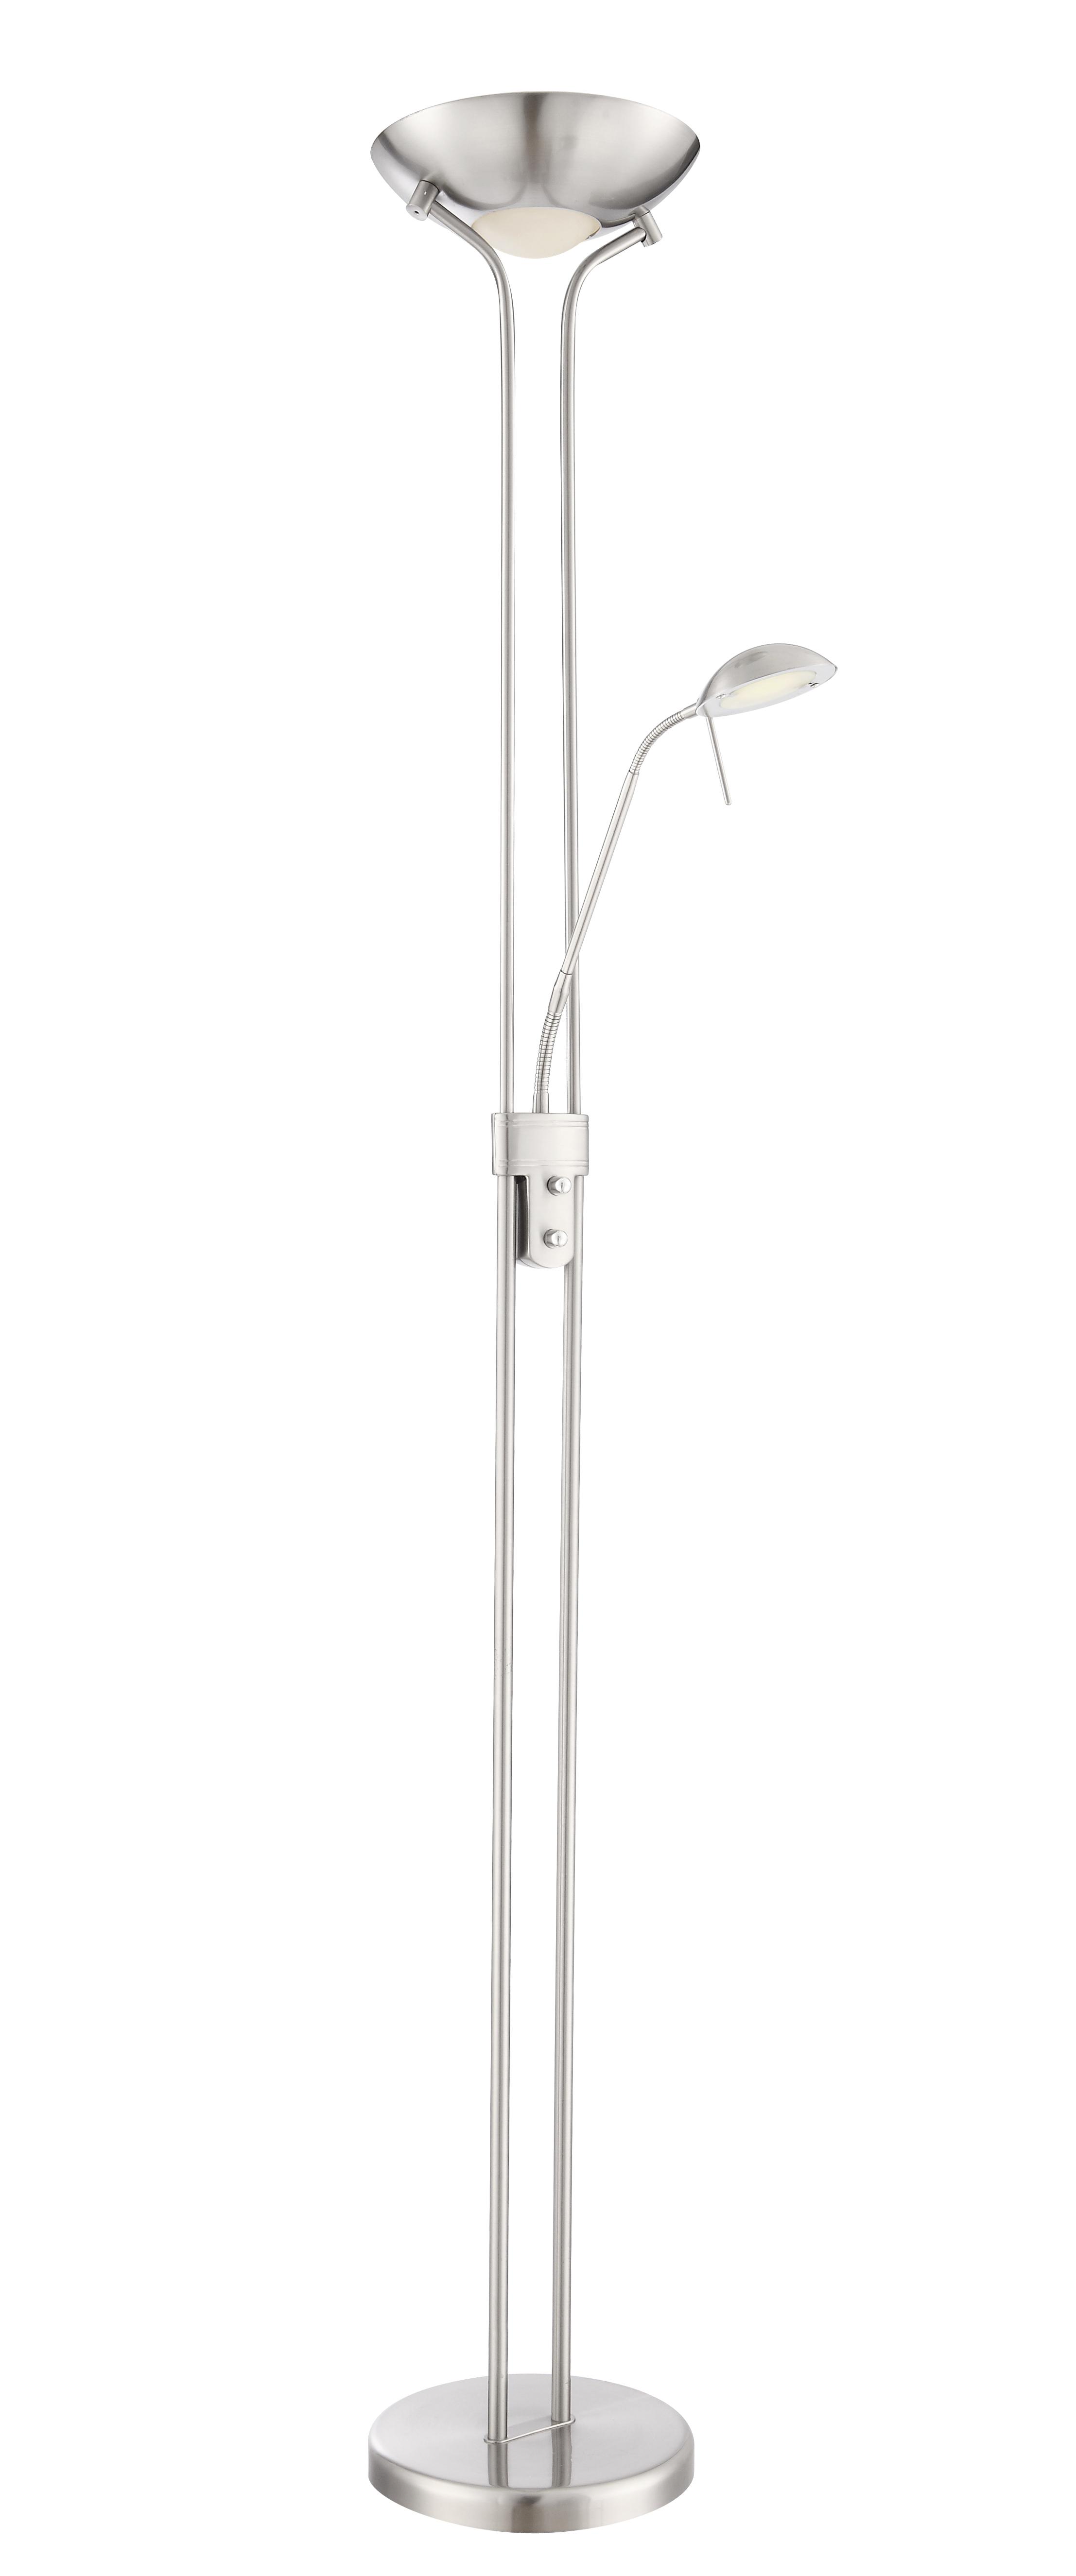 LED-Stehlampe Leonas dimmbar Nickelfarben mit Leselampe - Basics, Glas/Metall (25,5/180cm) - Globo